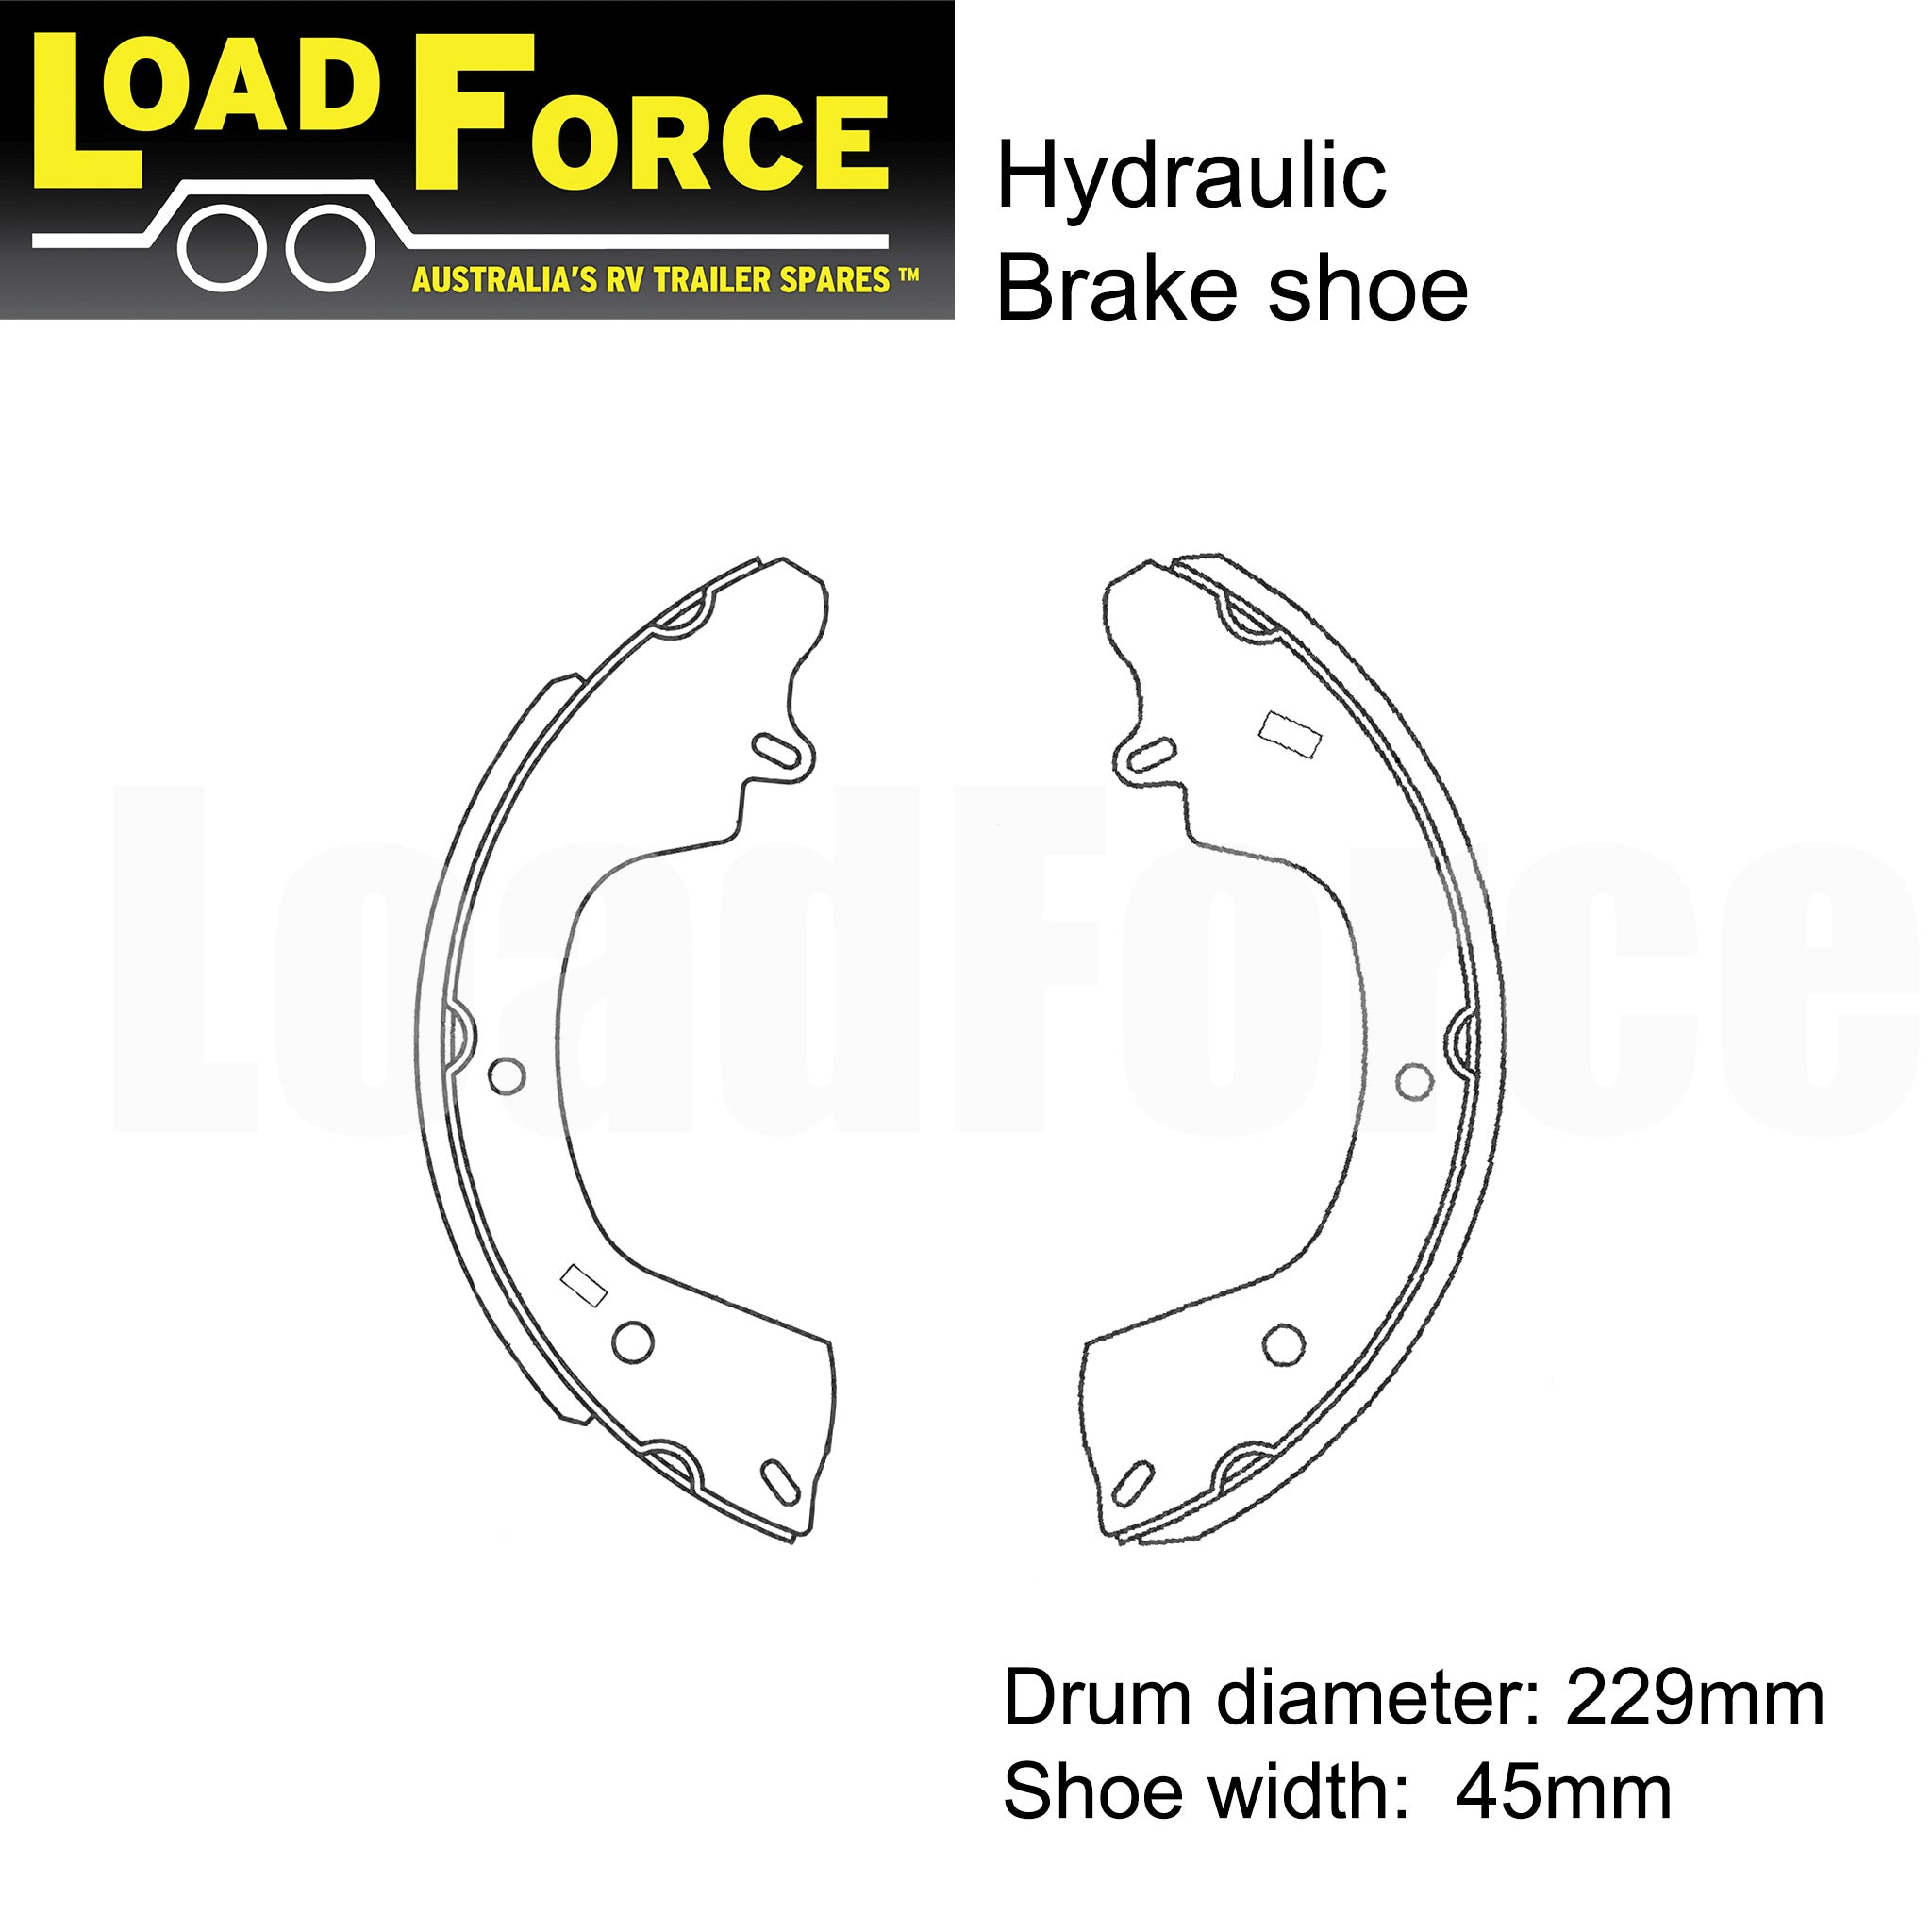 LoadForce 9 inch x 1.75 inch hydraulic brake shoe. Set of 4